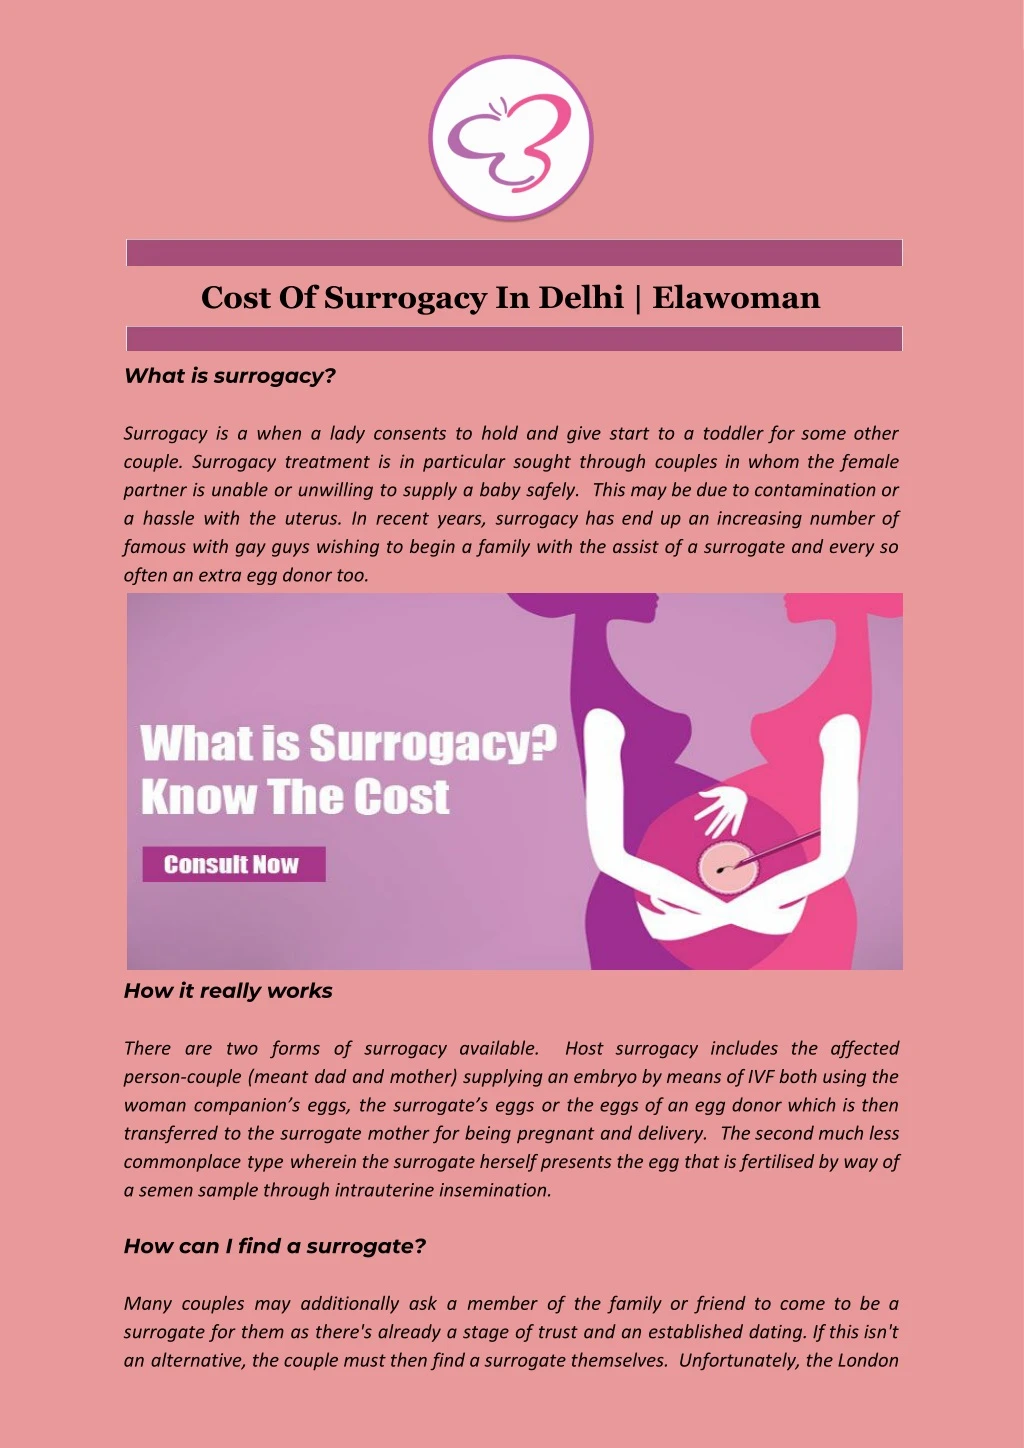 cost of surrogacy in delhi elawoman